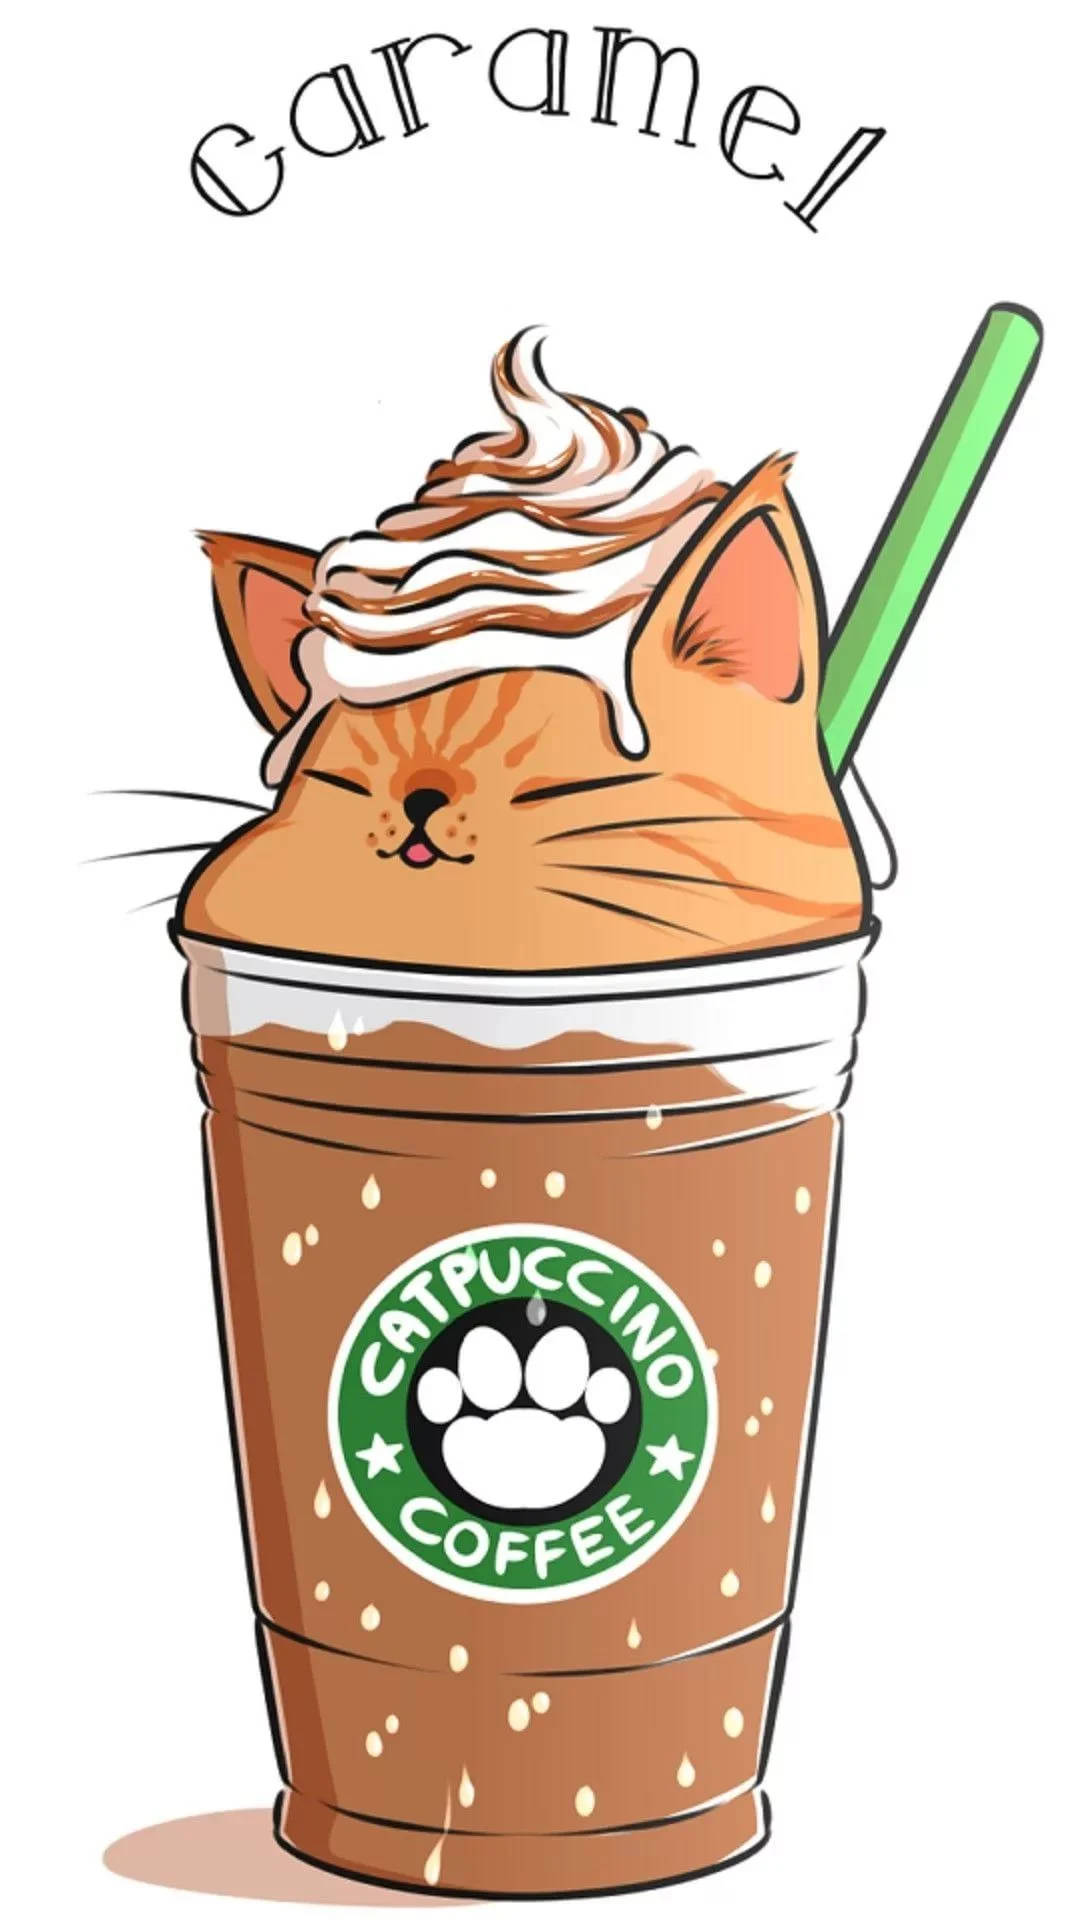 Whimsical Catpuccino Art At Starbucks